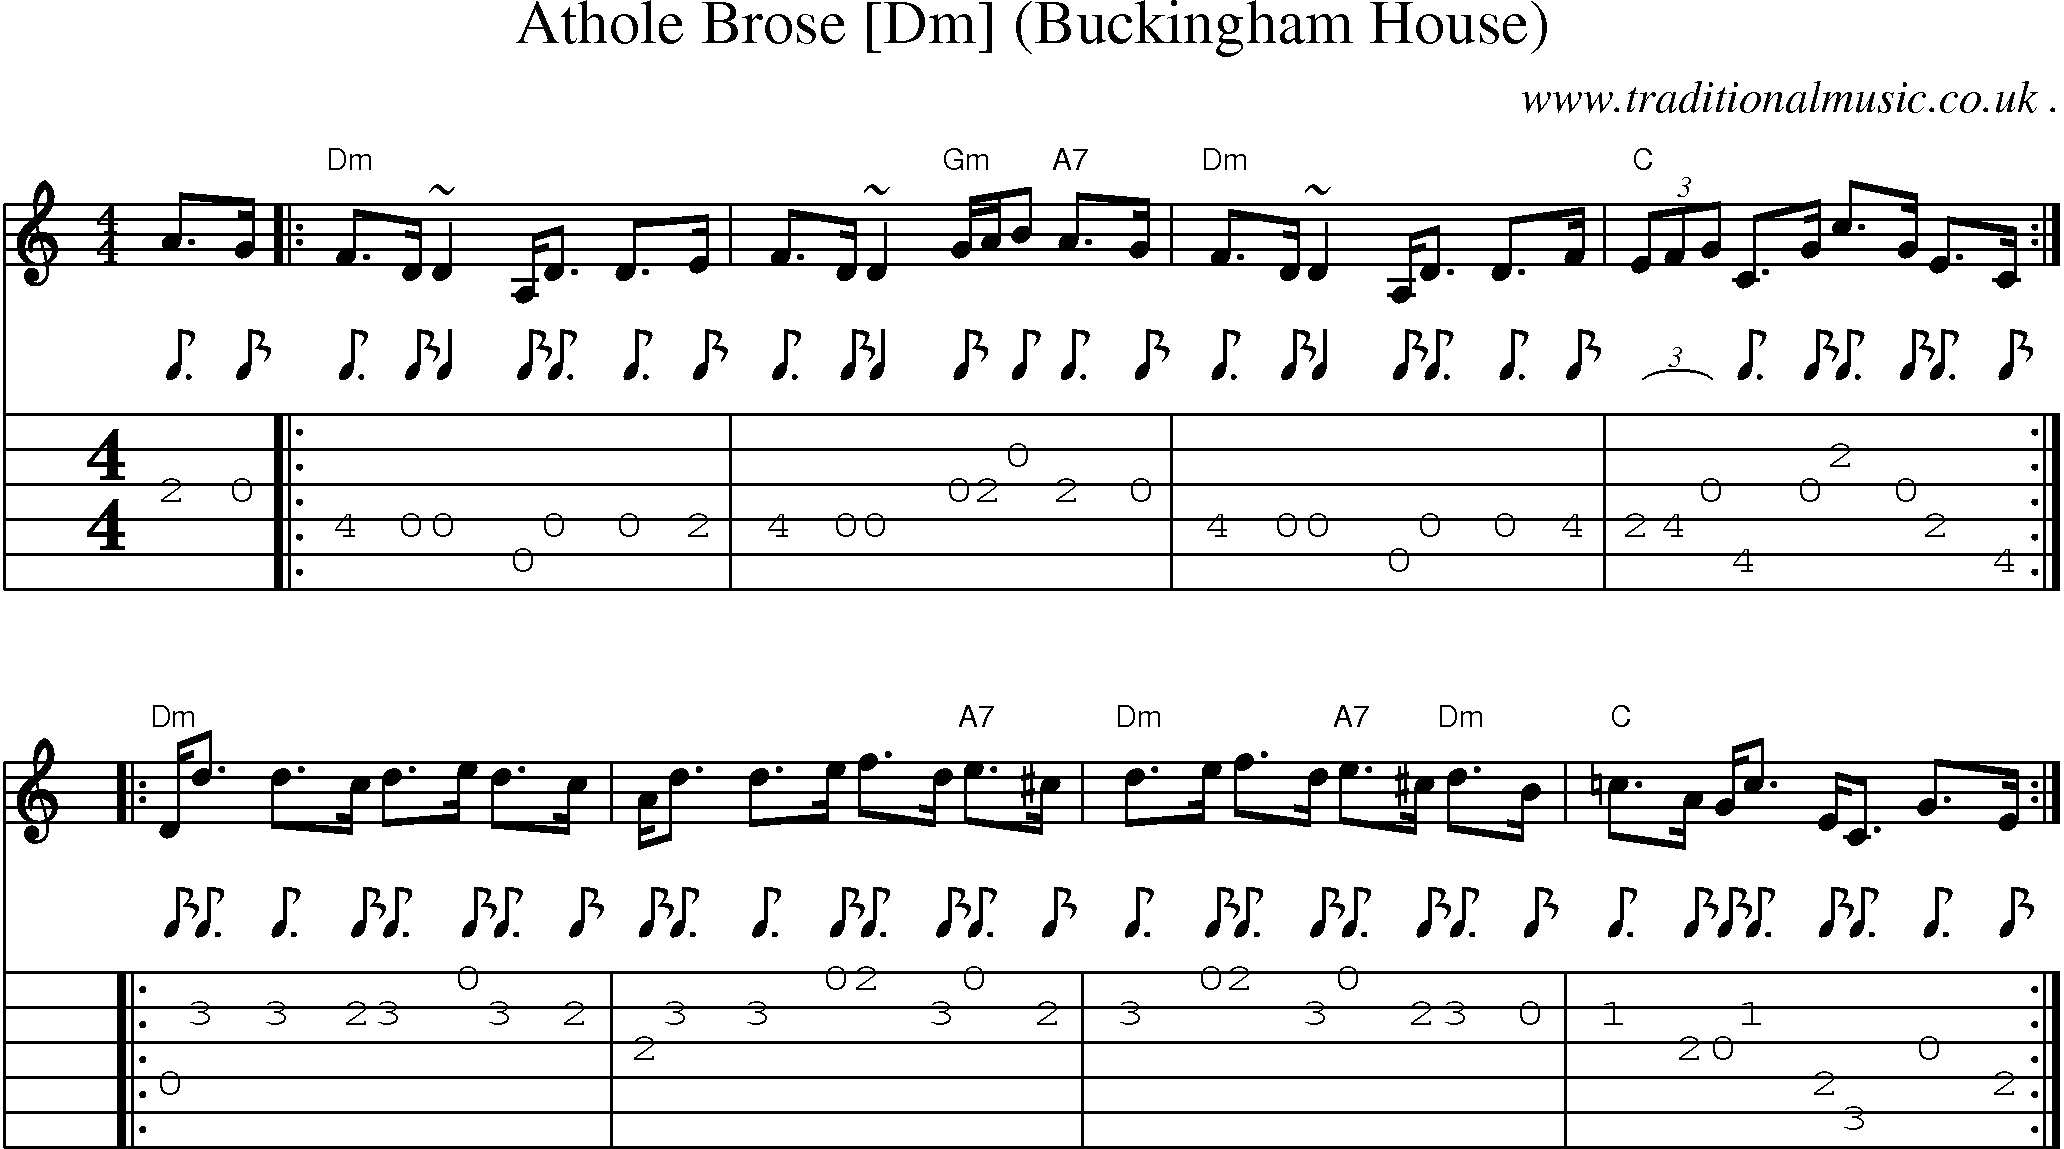 Sheet-music  score, Chords and Guitar Tabs for Athole Brose [dm] Buckingham House